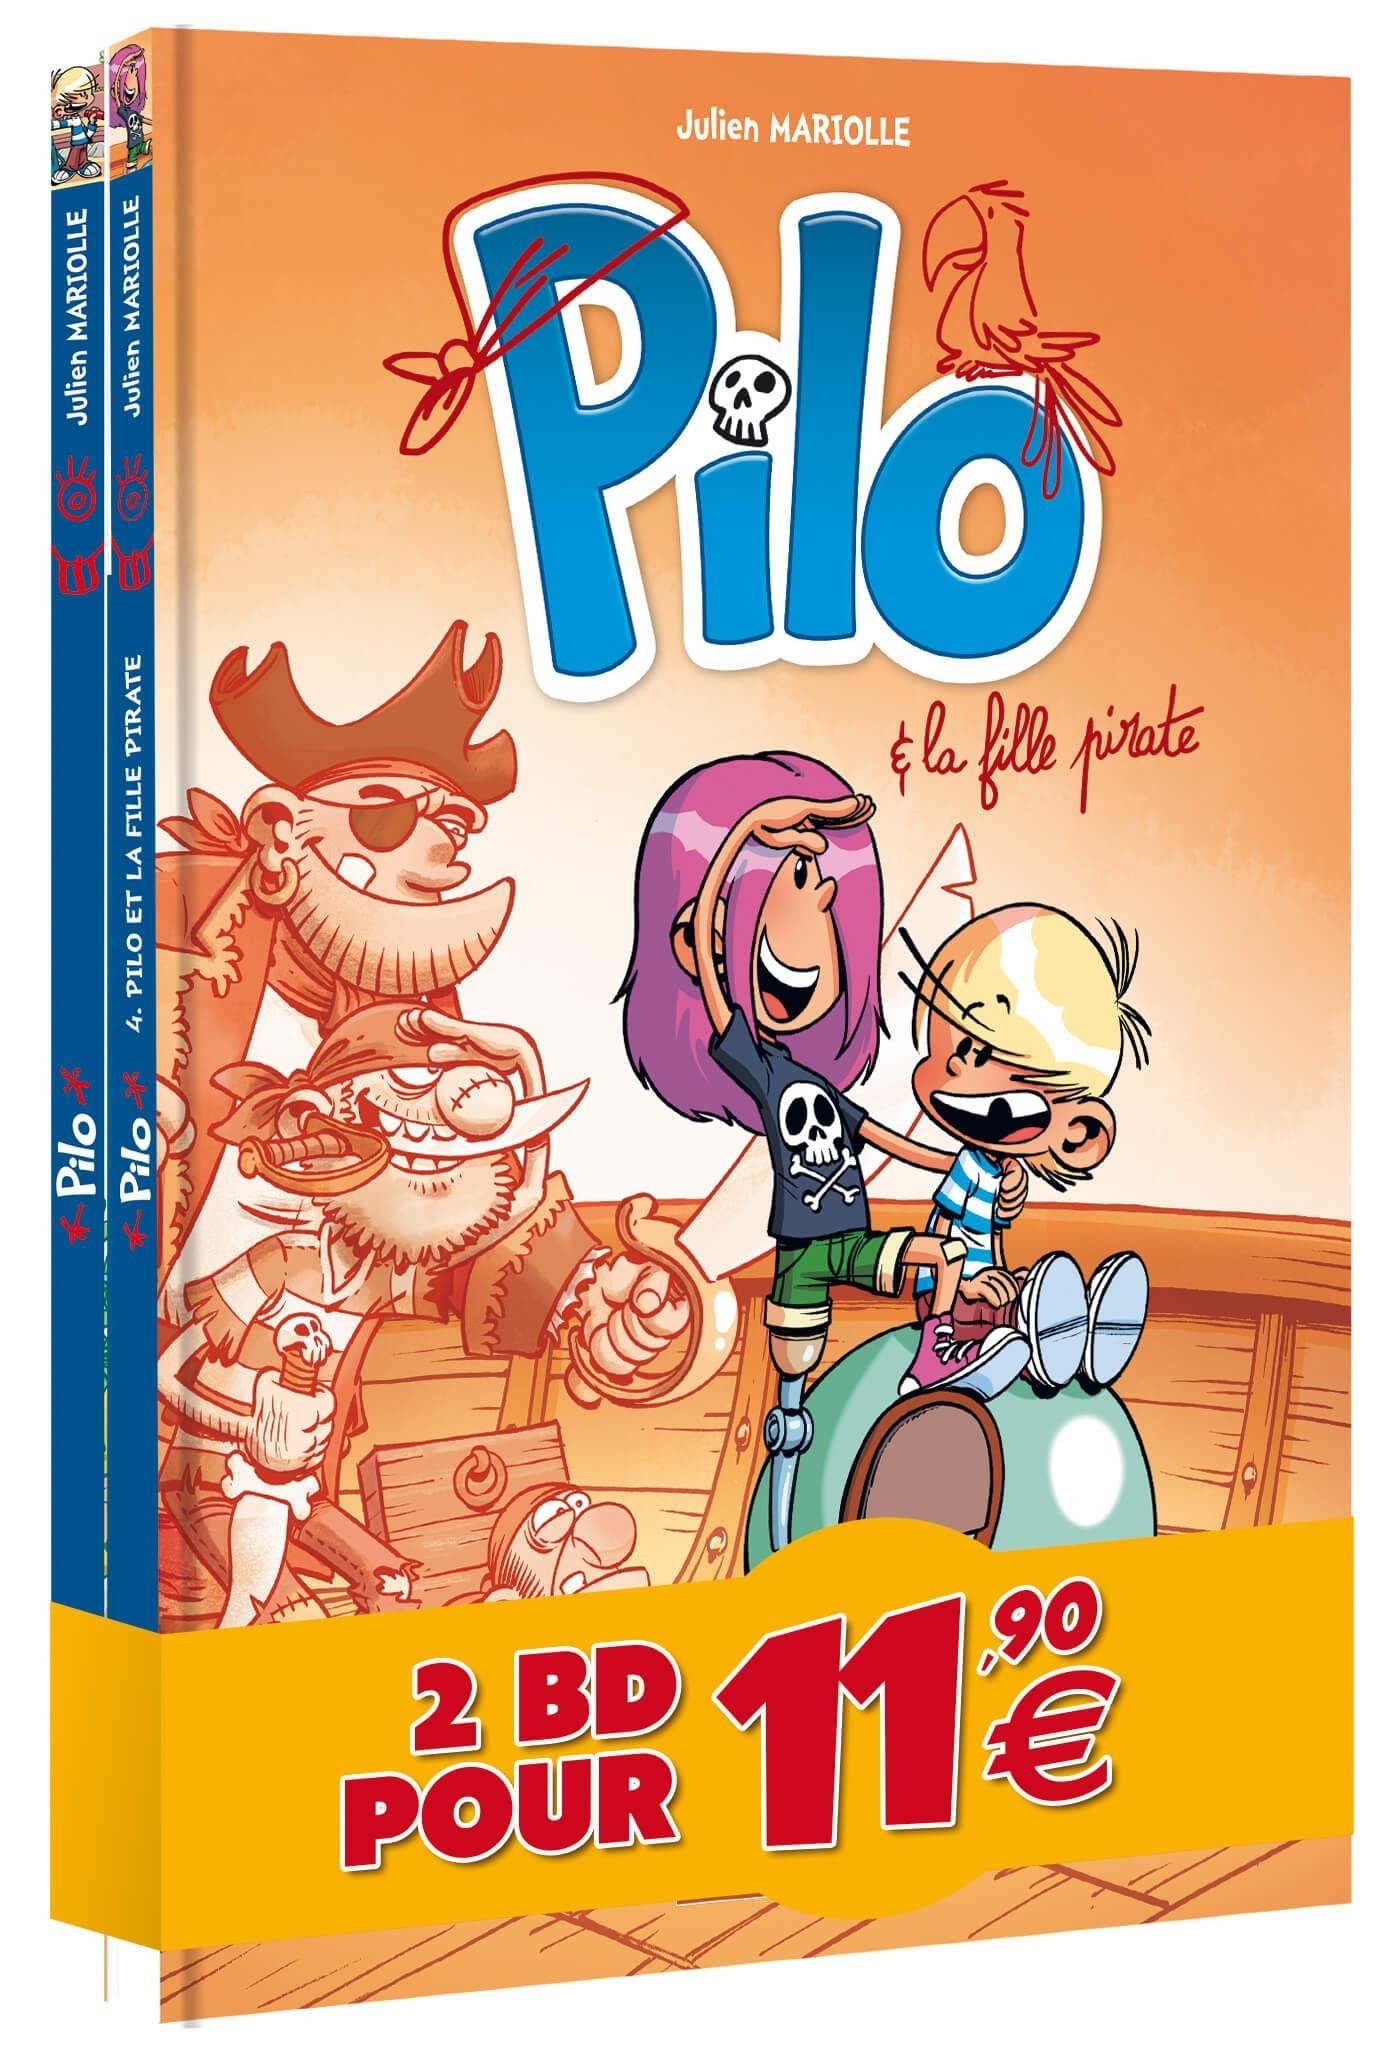 Pilo - Pack promo tome 04 + album offert (9782818998830-front-cover)